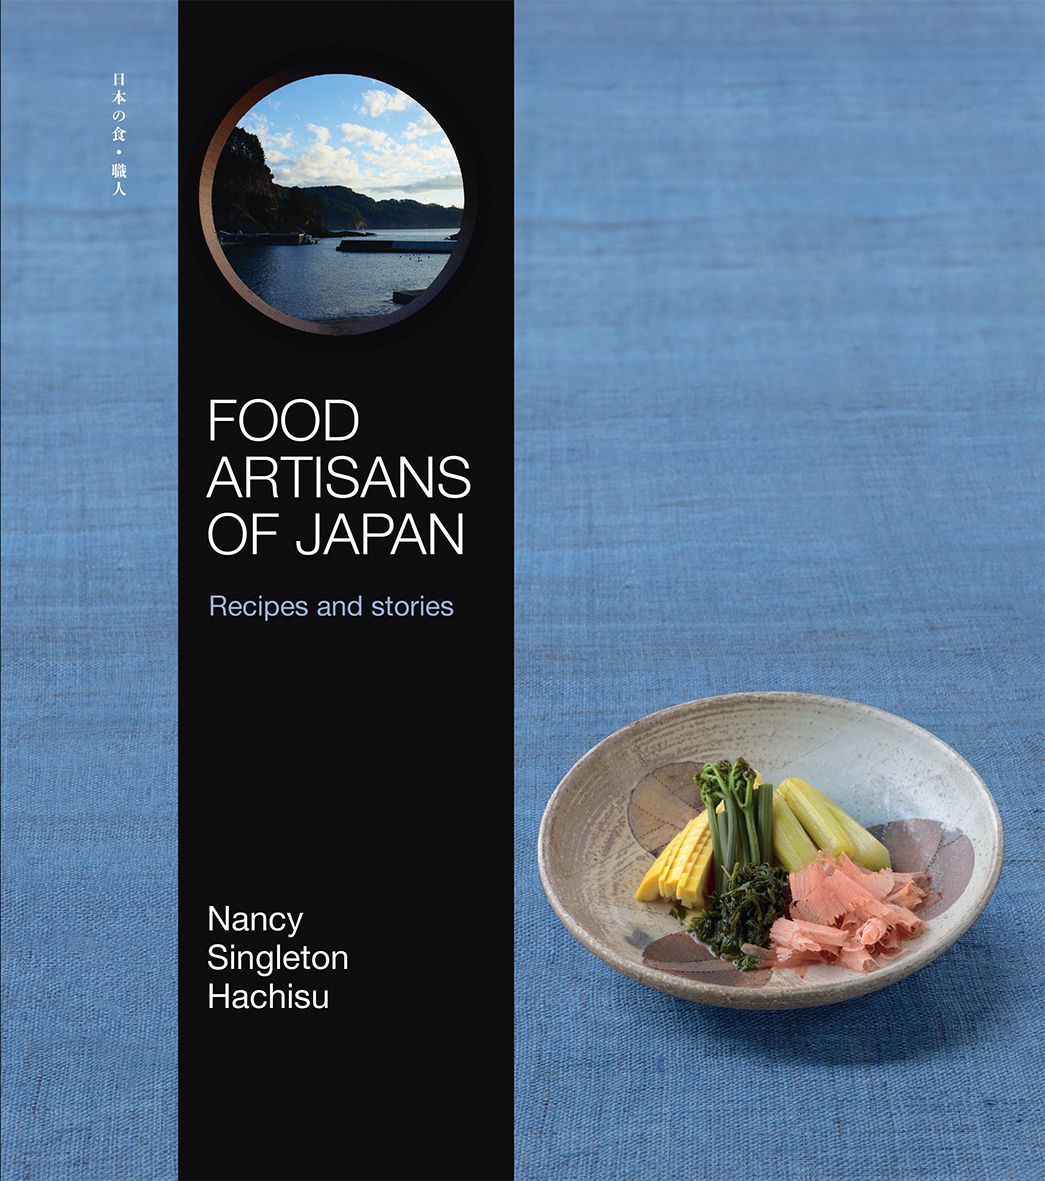 “Food Artisans of Japan” cookbook cover